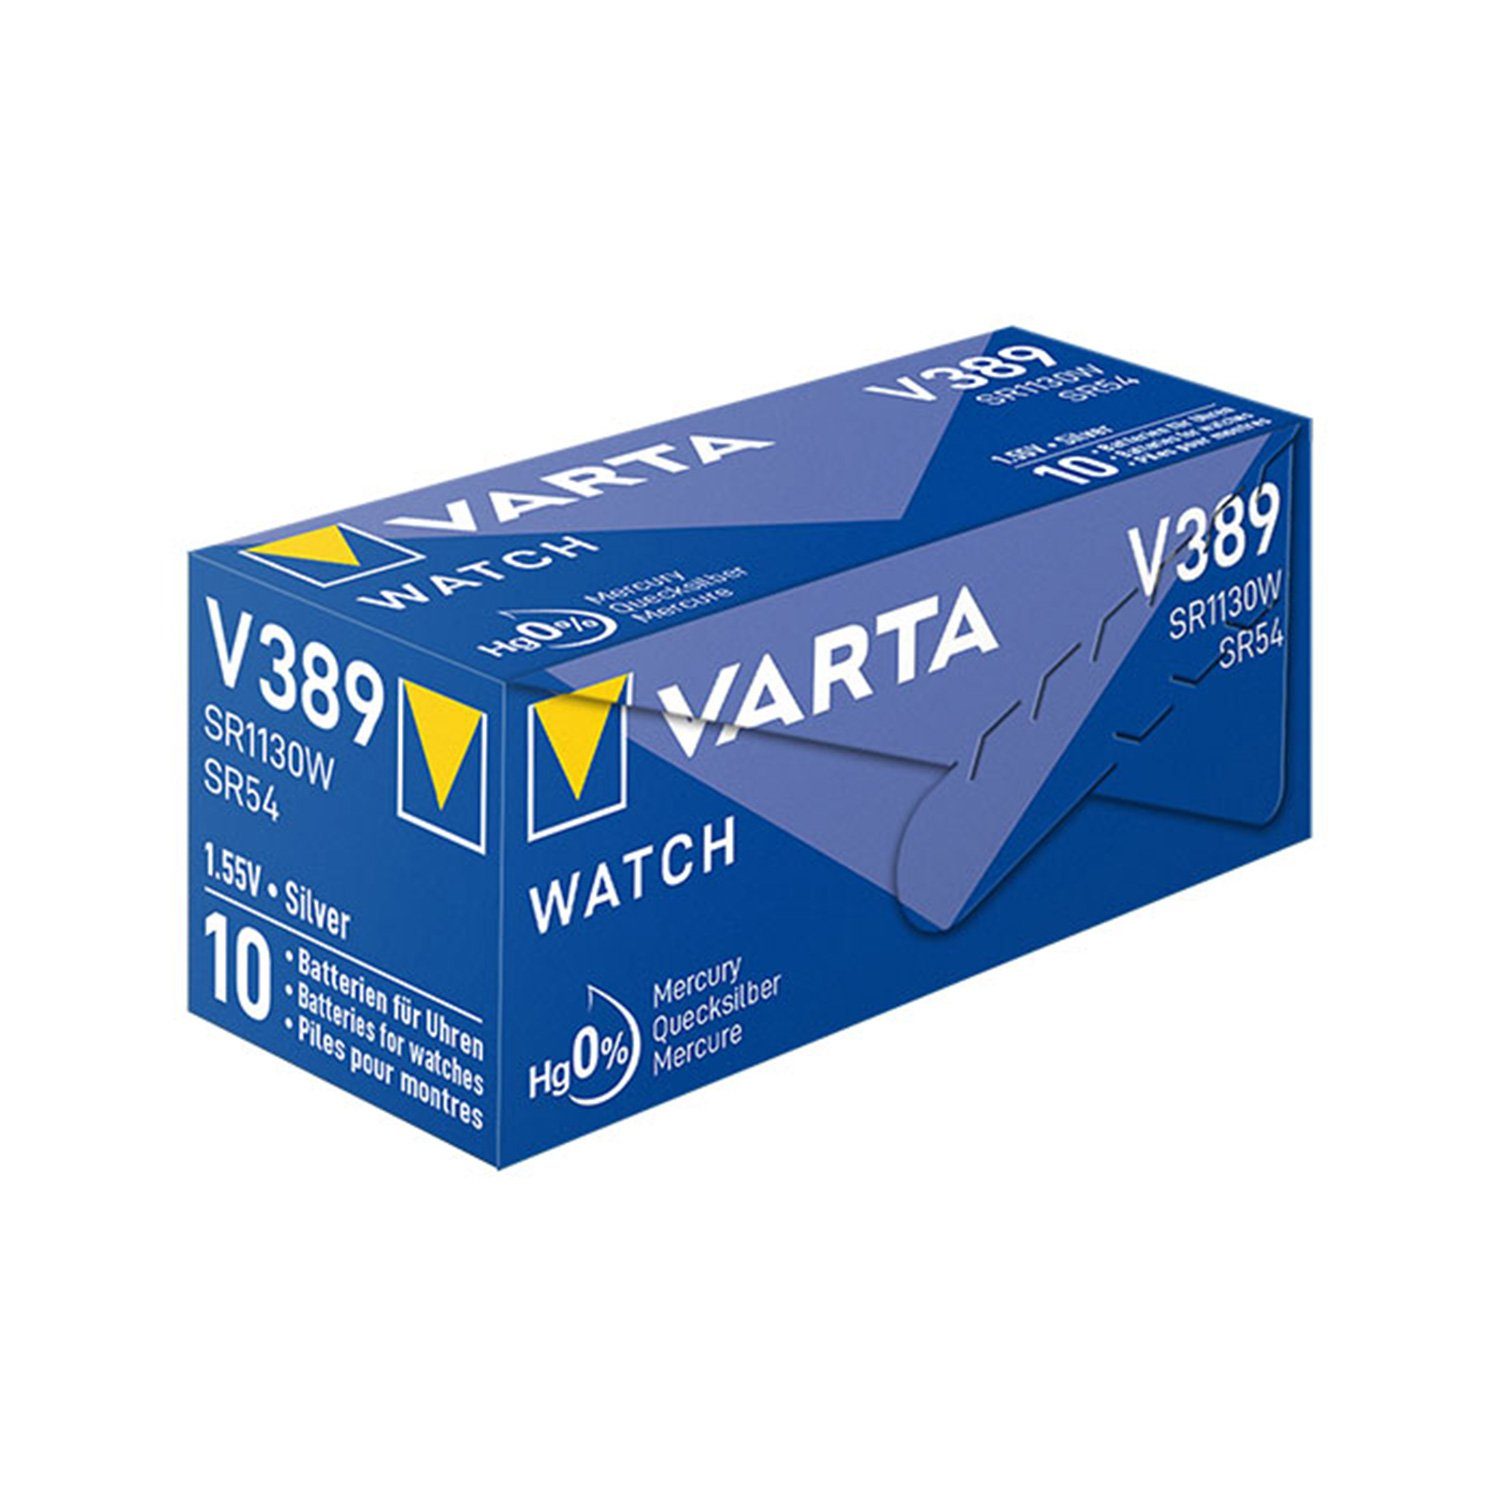 VARTA Varta 389 Knopfzelle Batterie